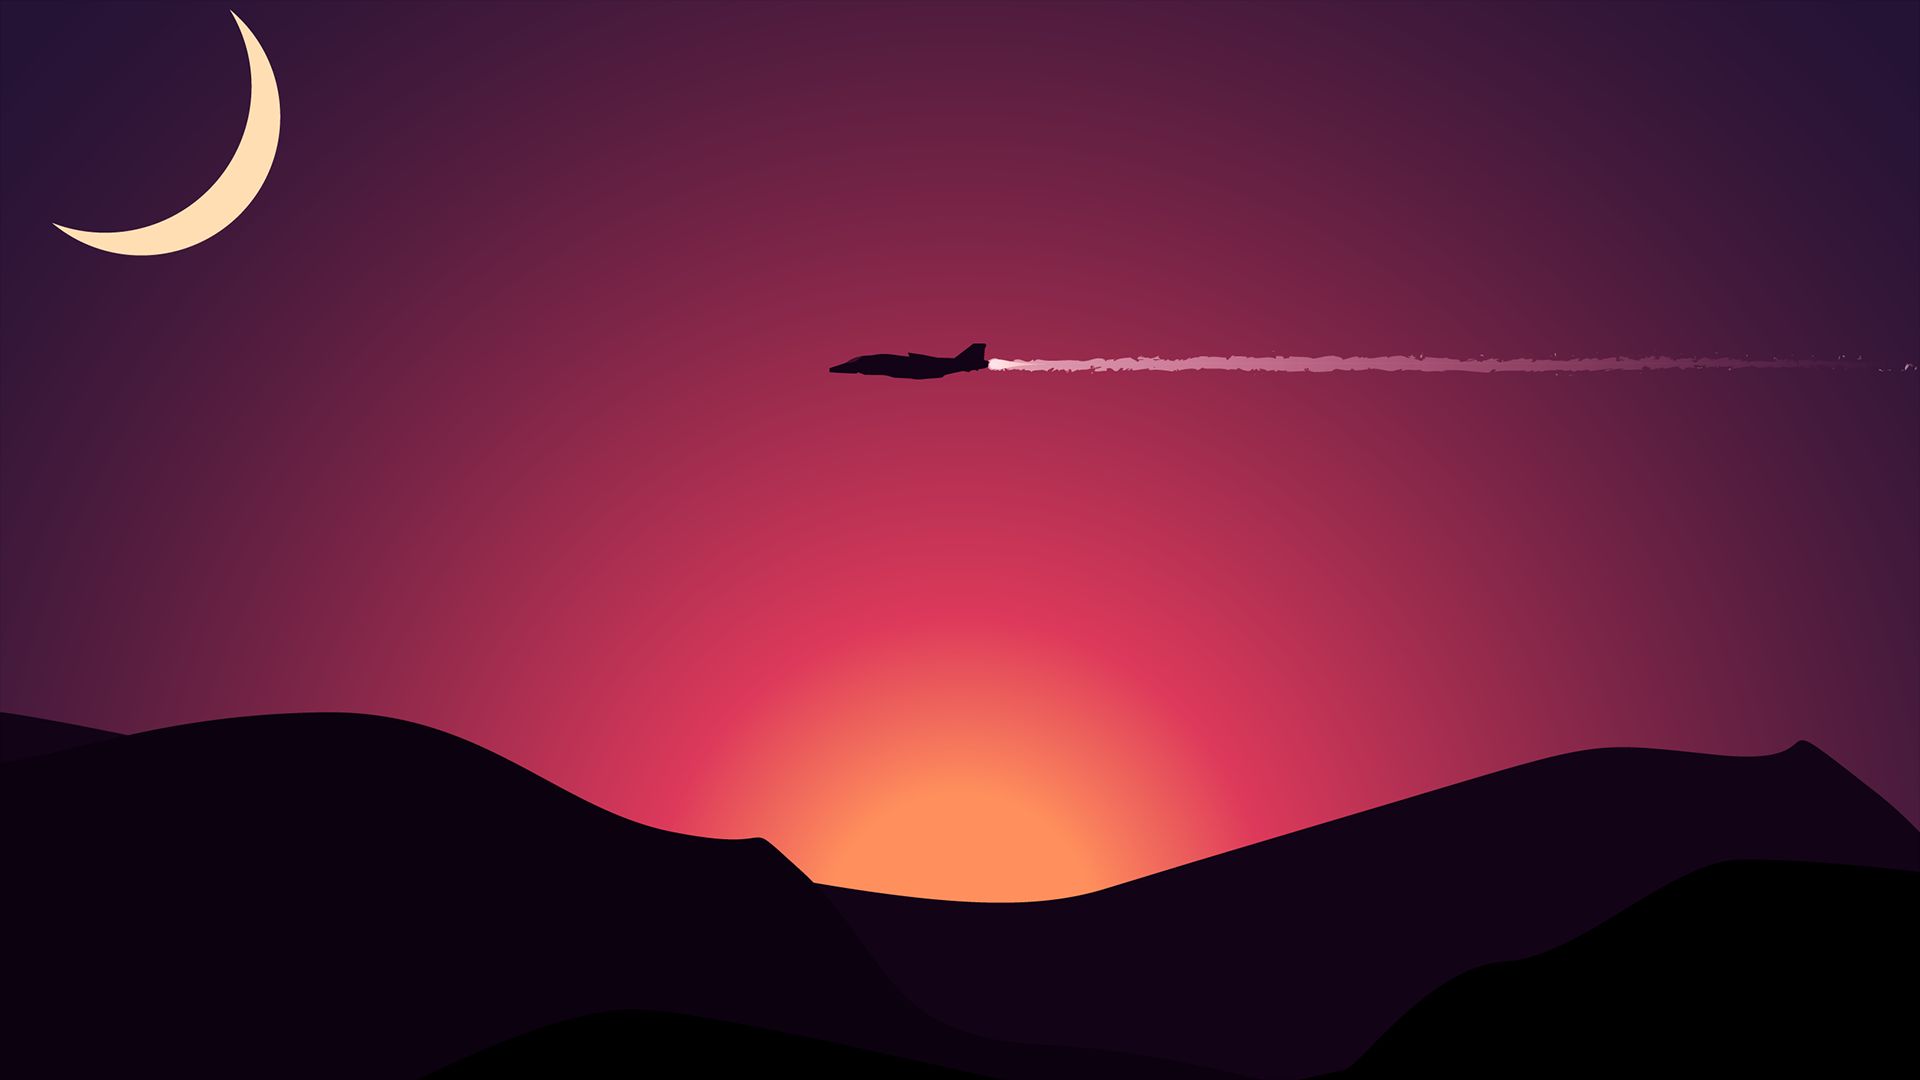 military, artistic, airplane, crescent, minimalist, sunset